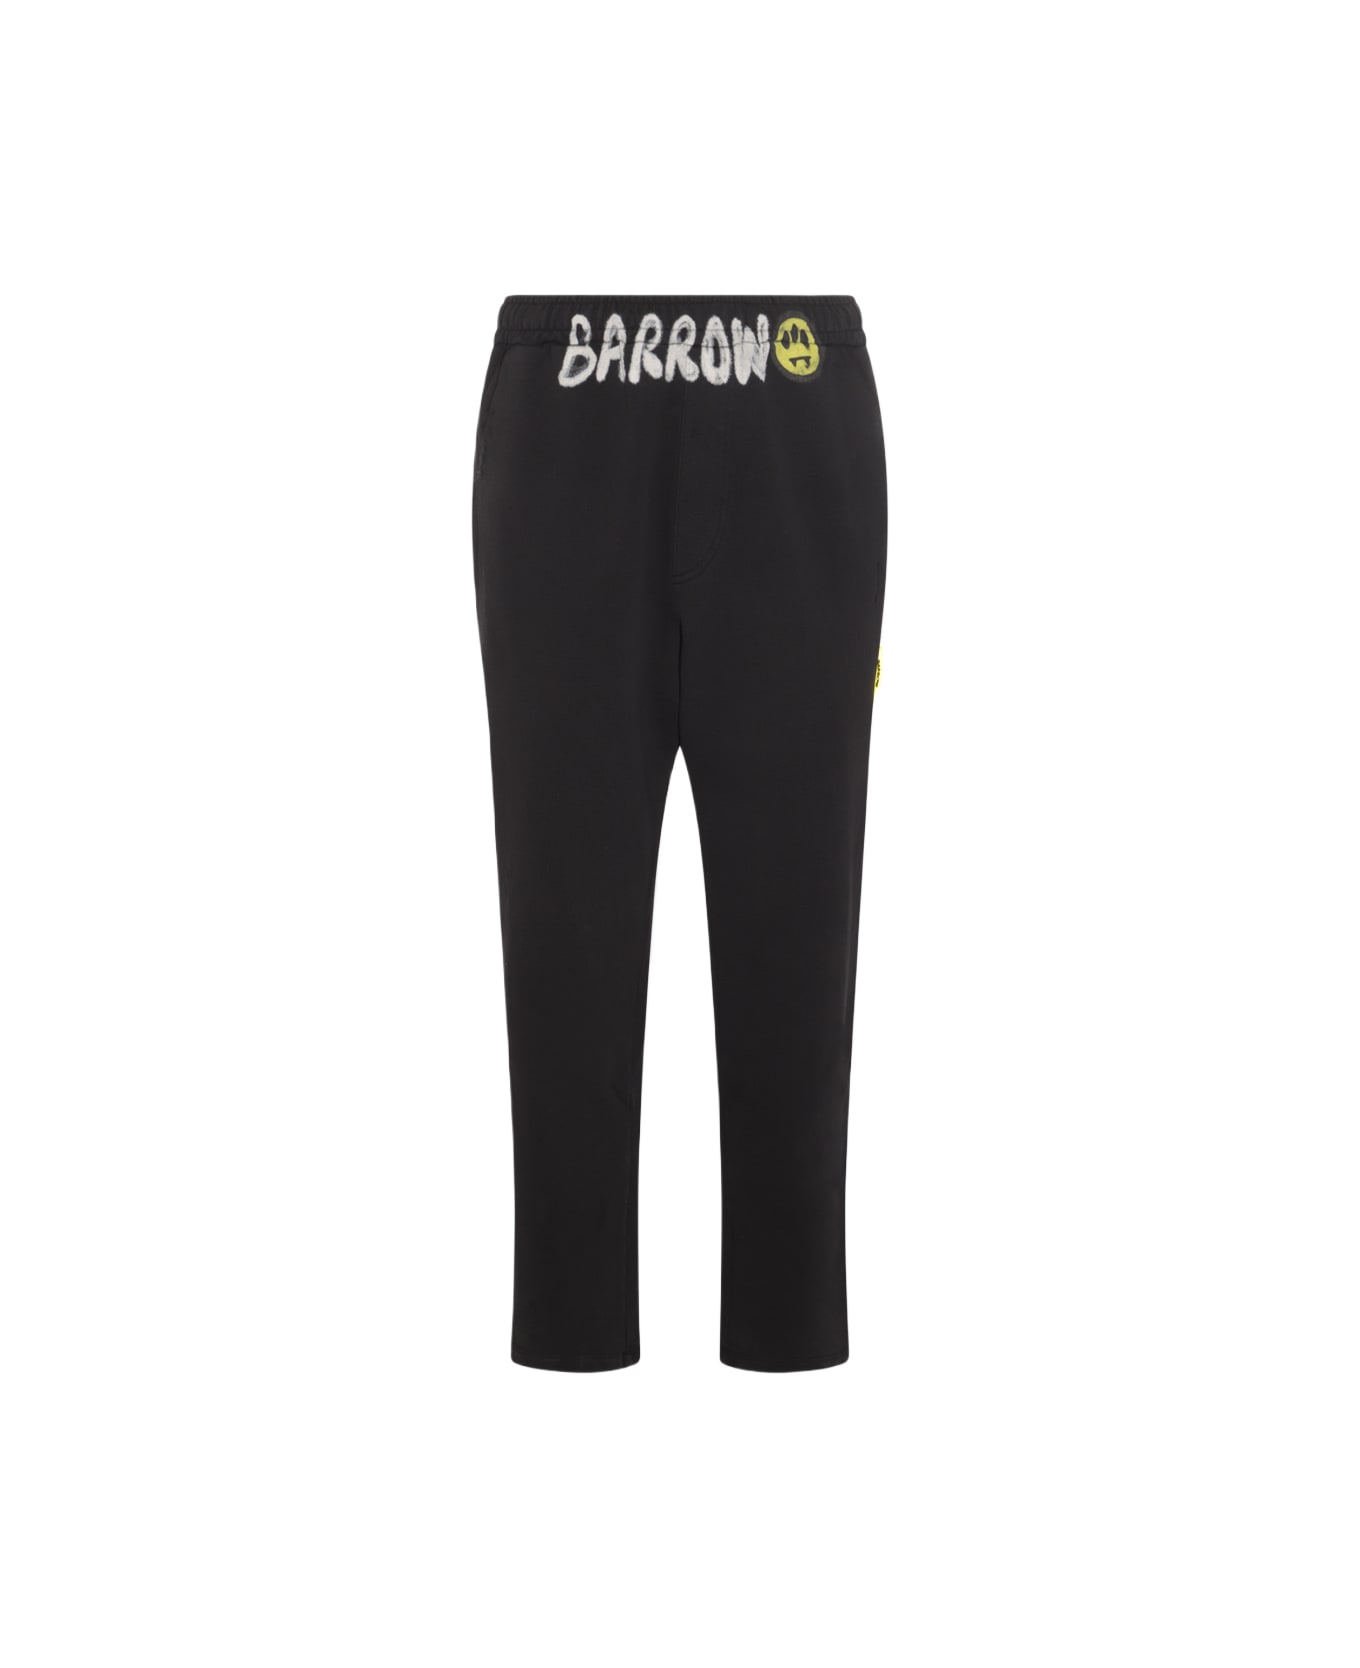 Barrow Black Cotton Pants - Black